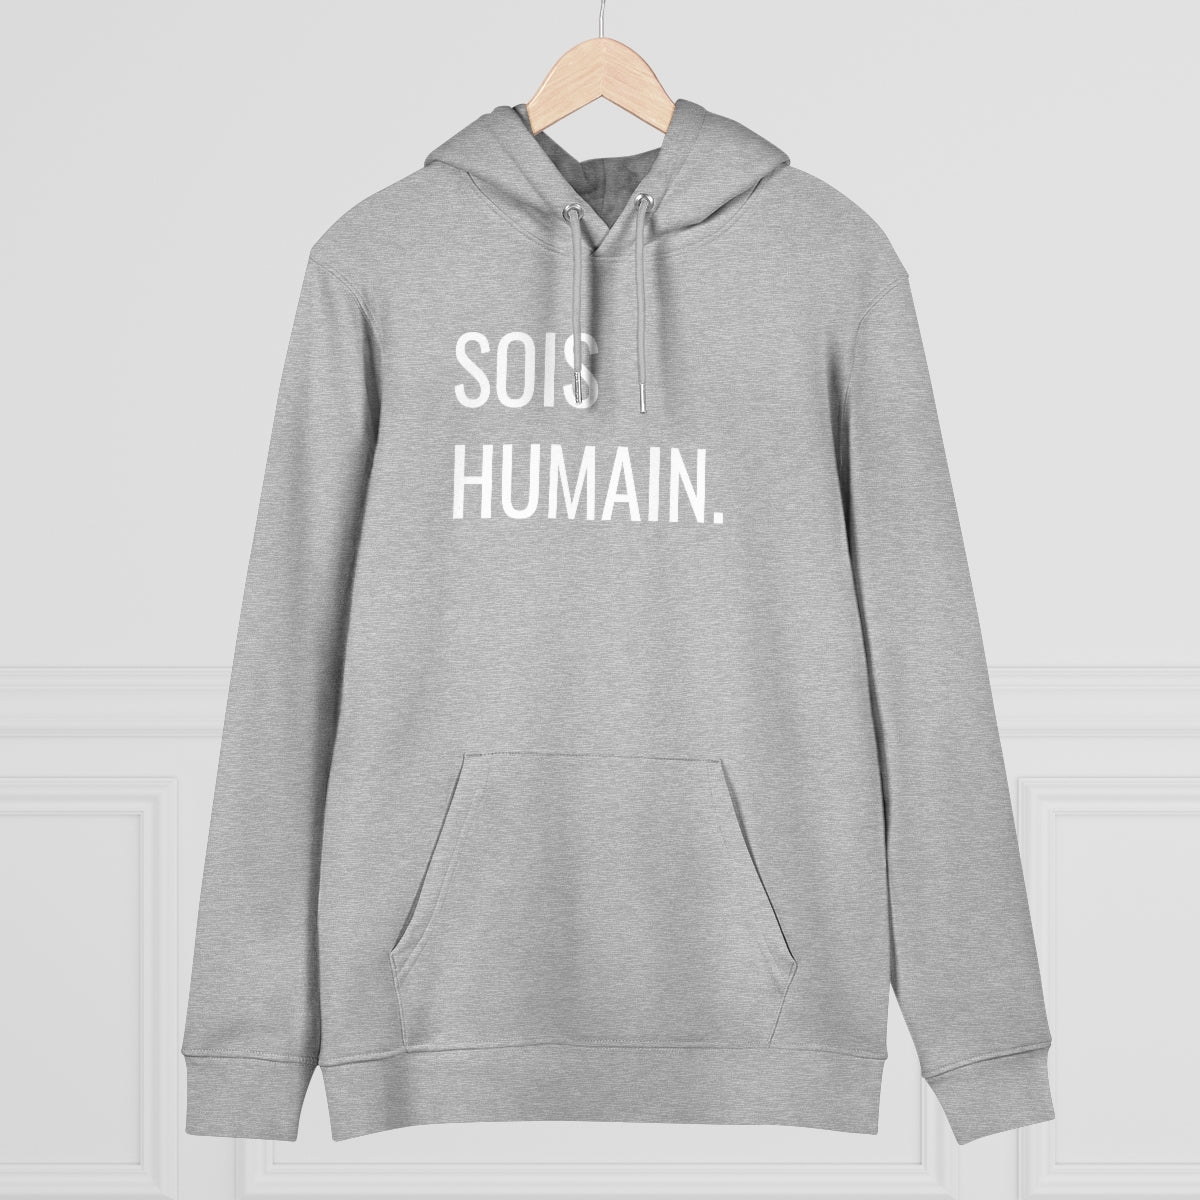 SOIS HUMAIN. - hoodie